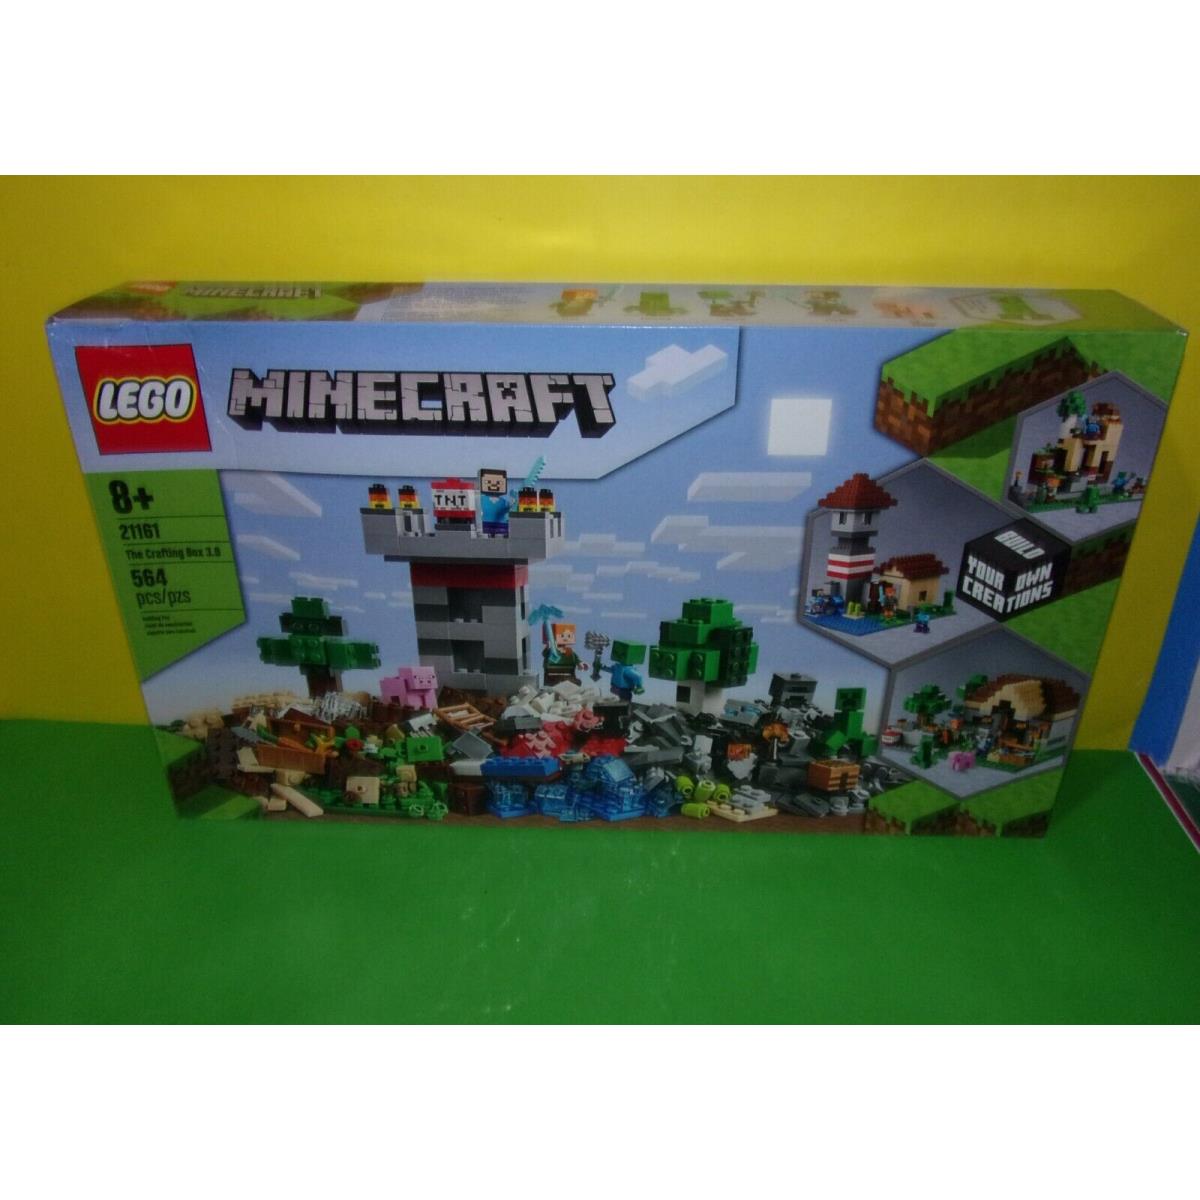 Lego Minecraft The Crafting Box 3.0 21161 Boxed Set